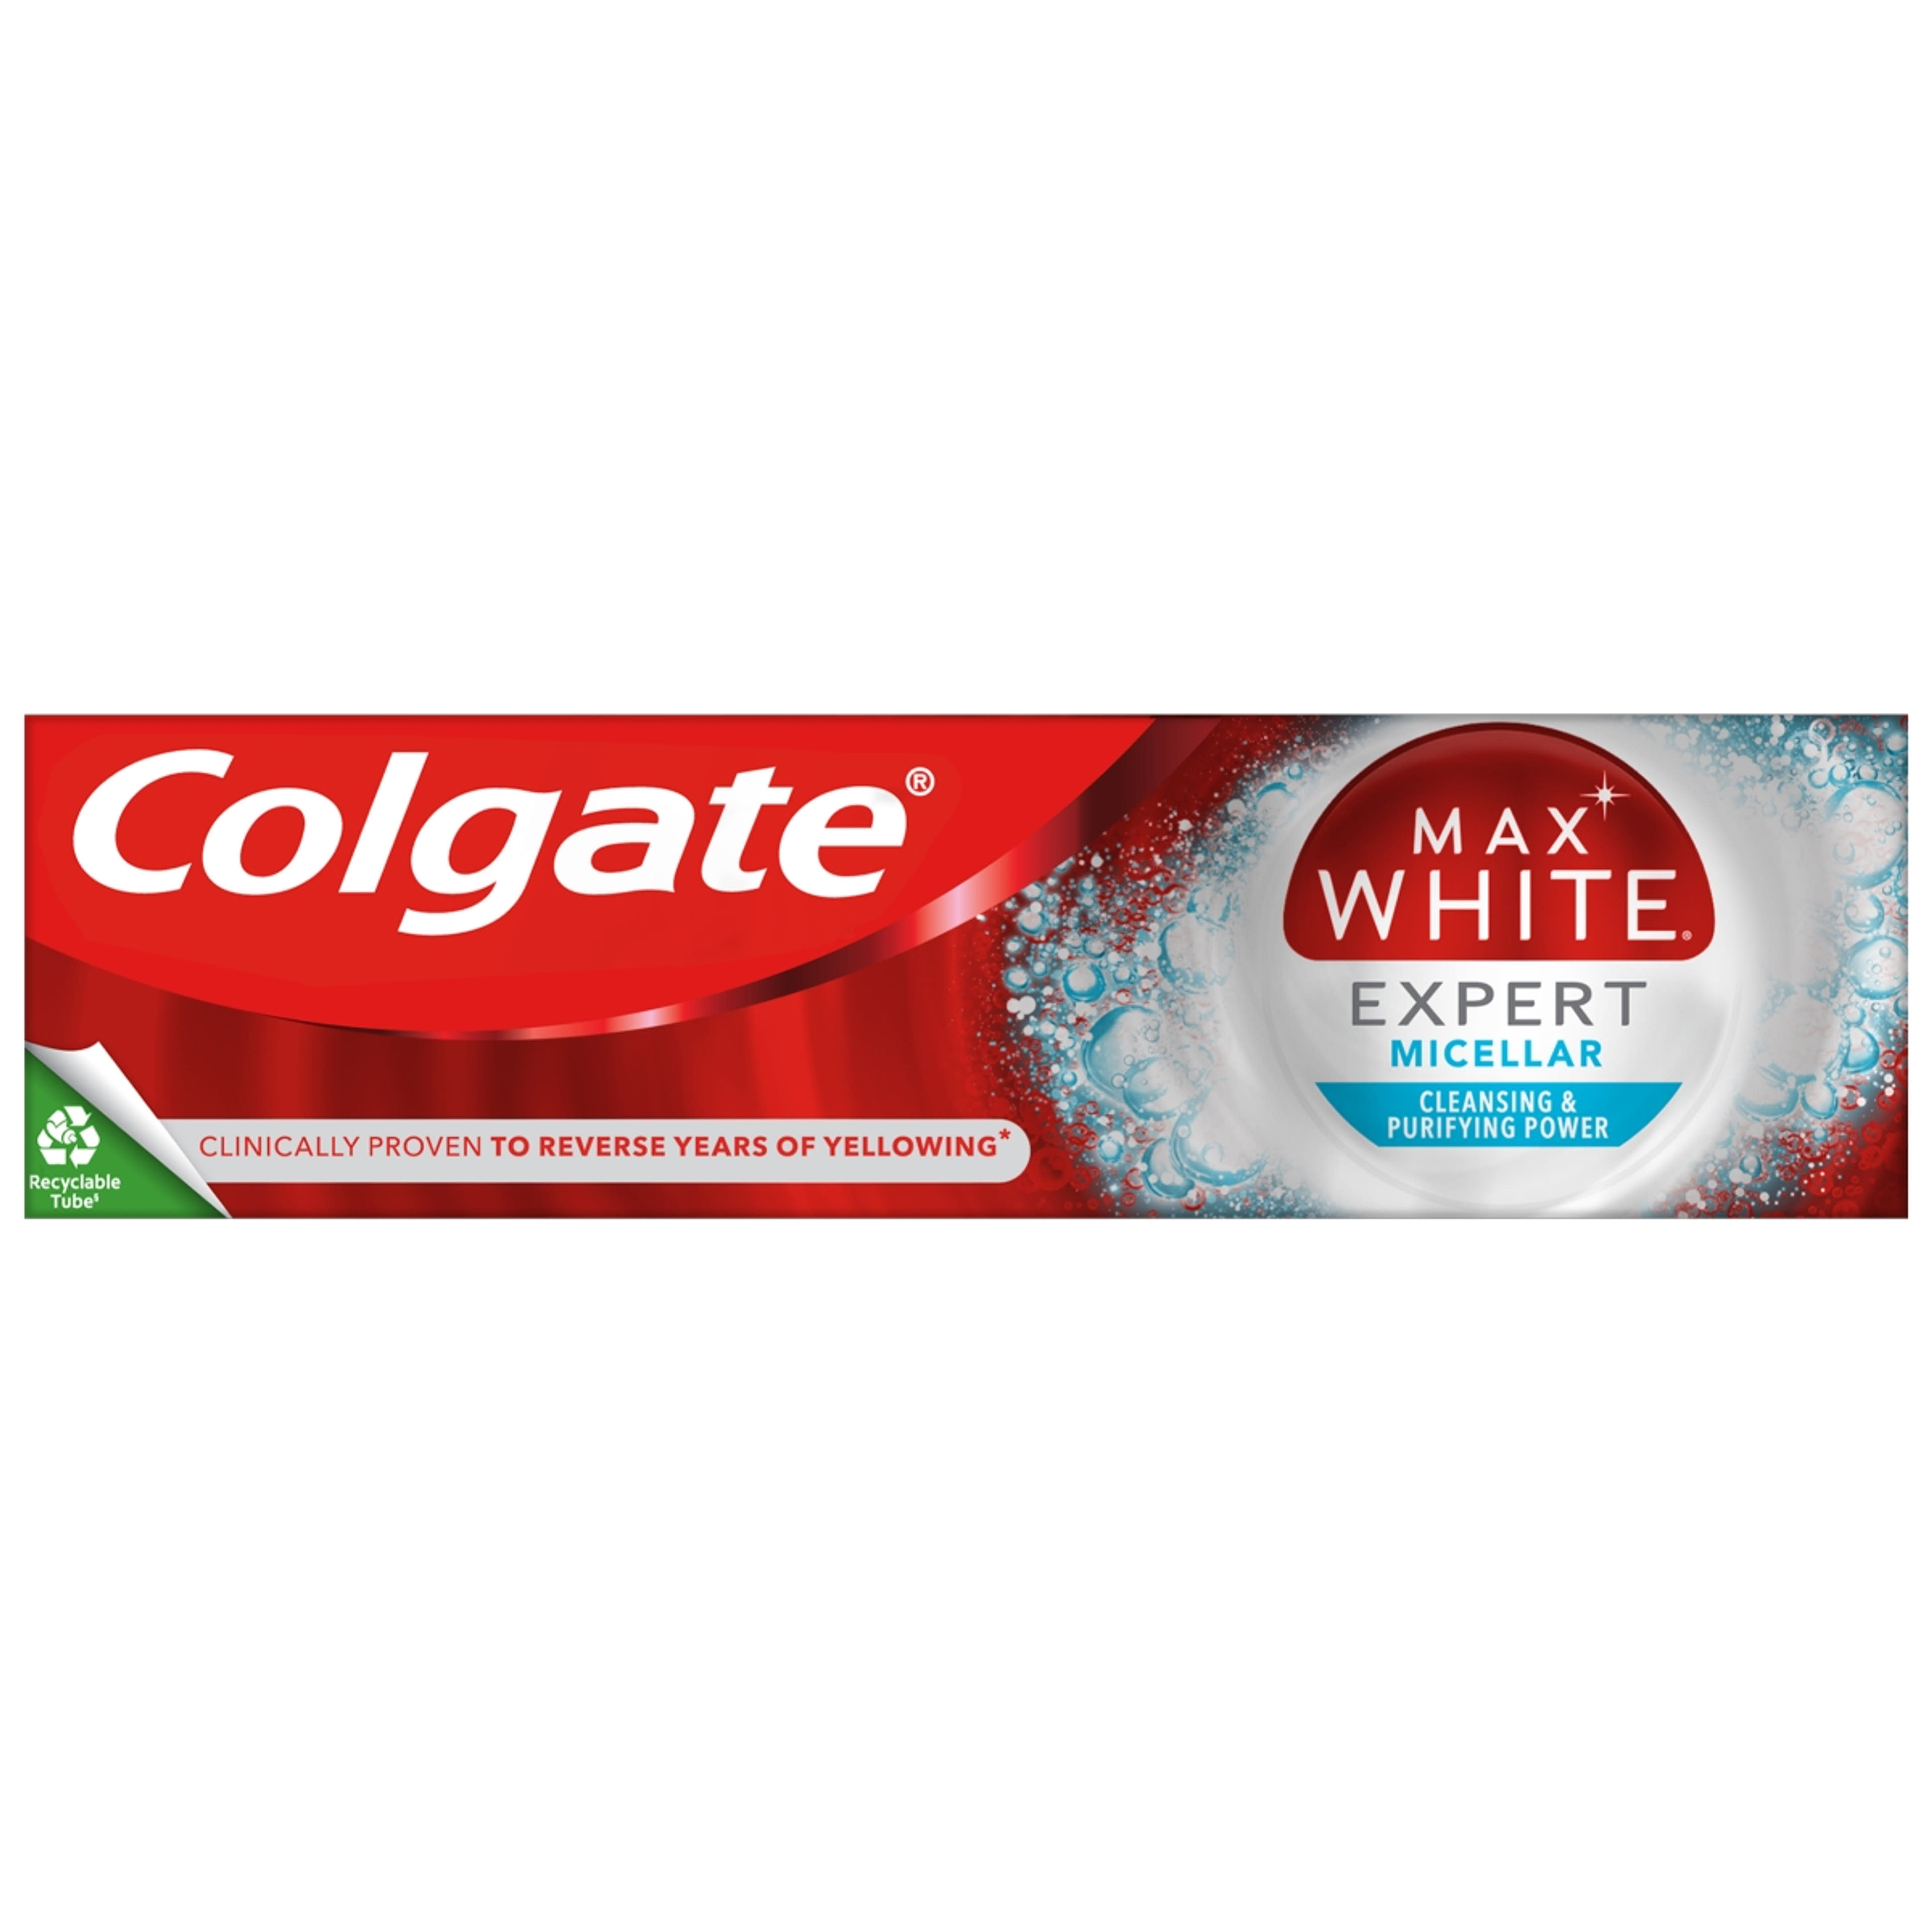 Colgate Max White Expert Micellar fogfehérítő fogkrém - 75 ml